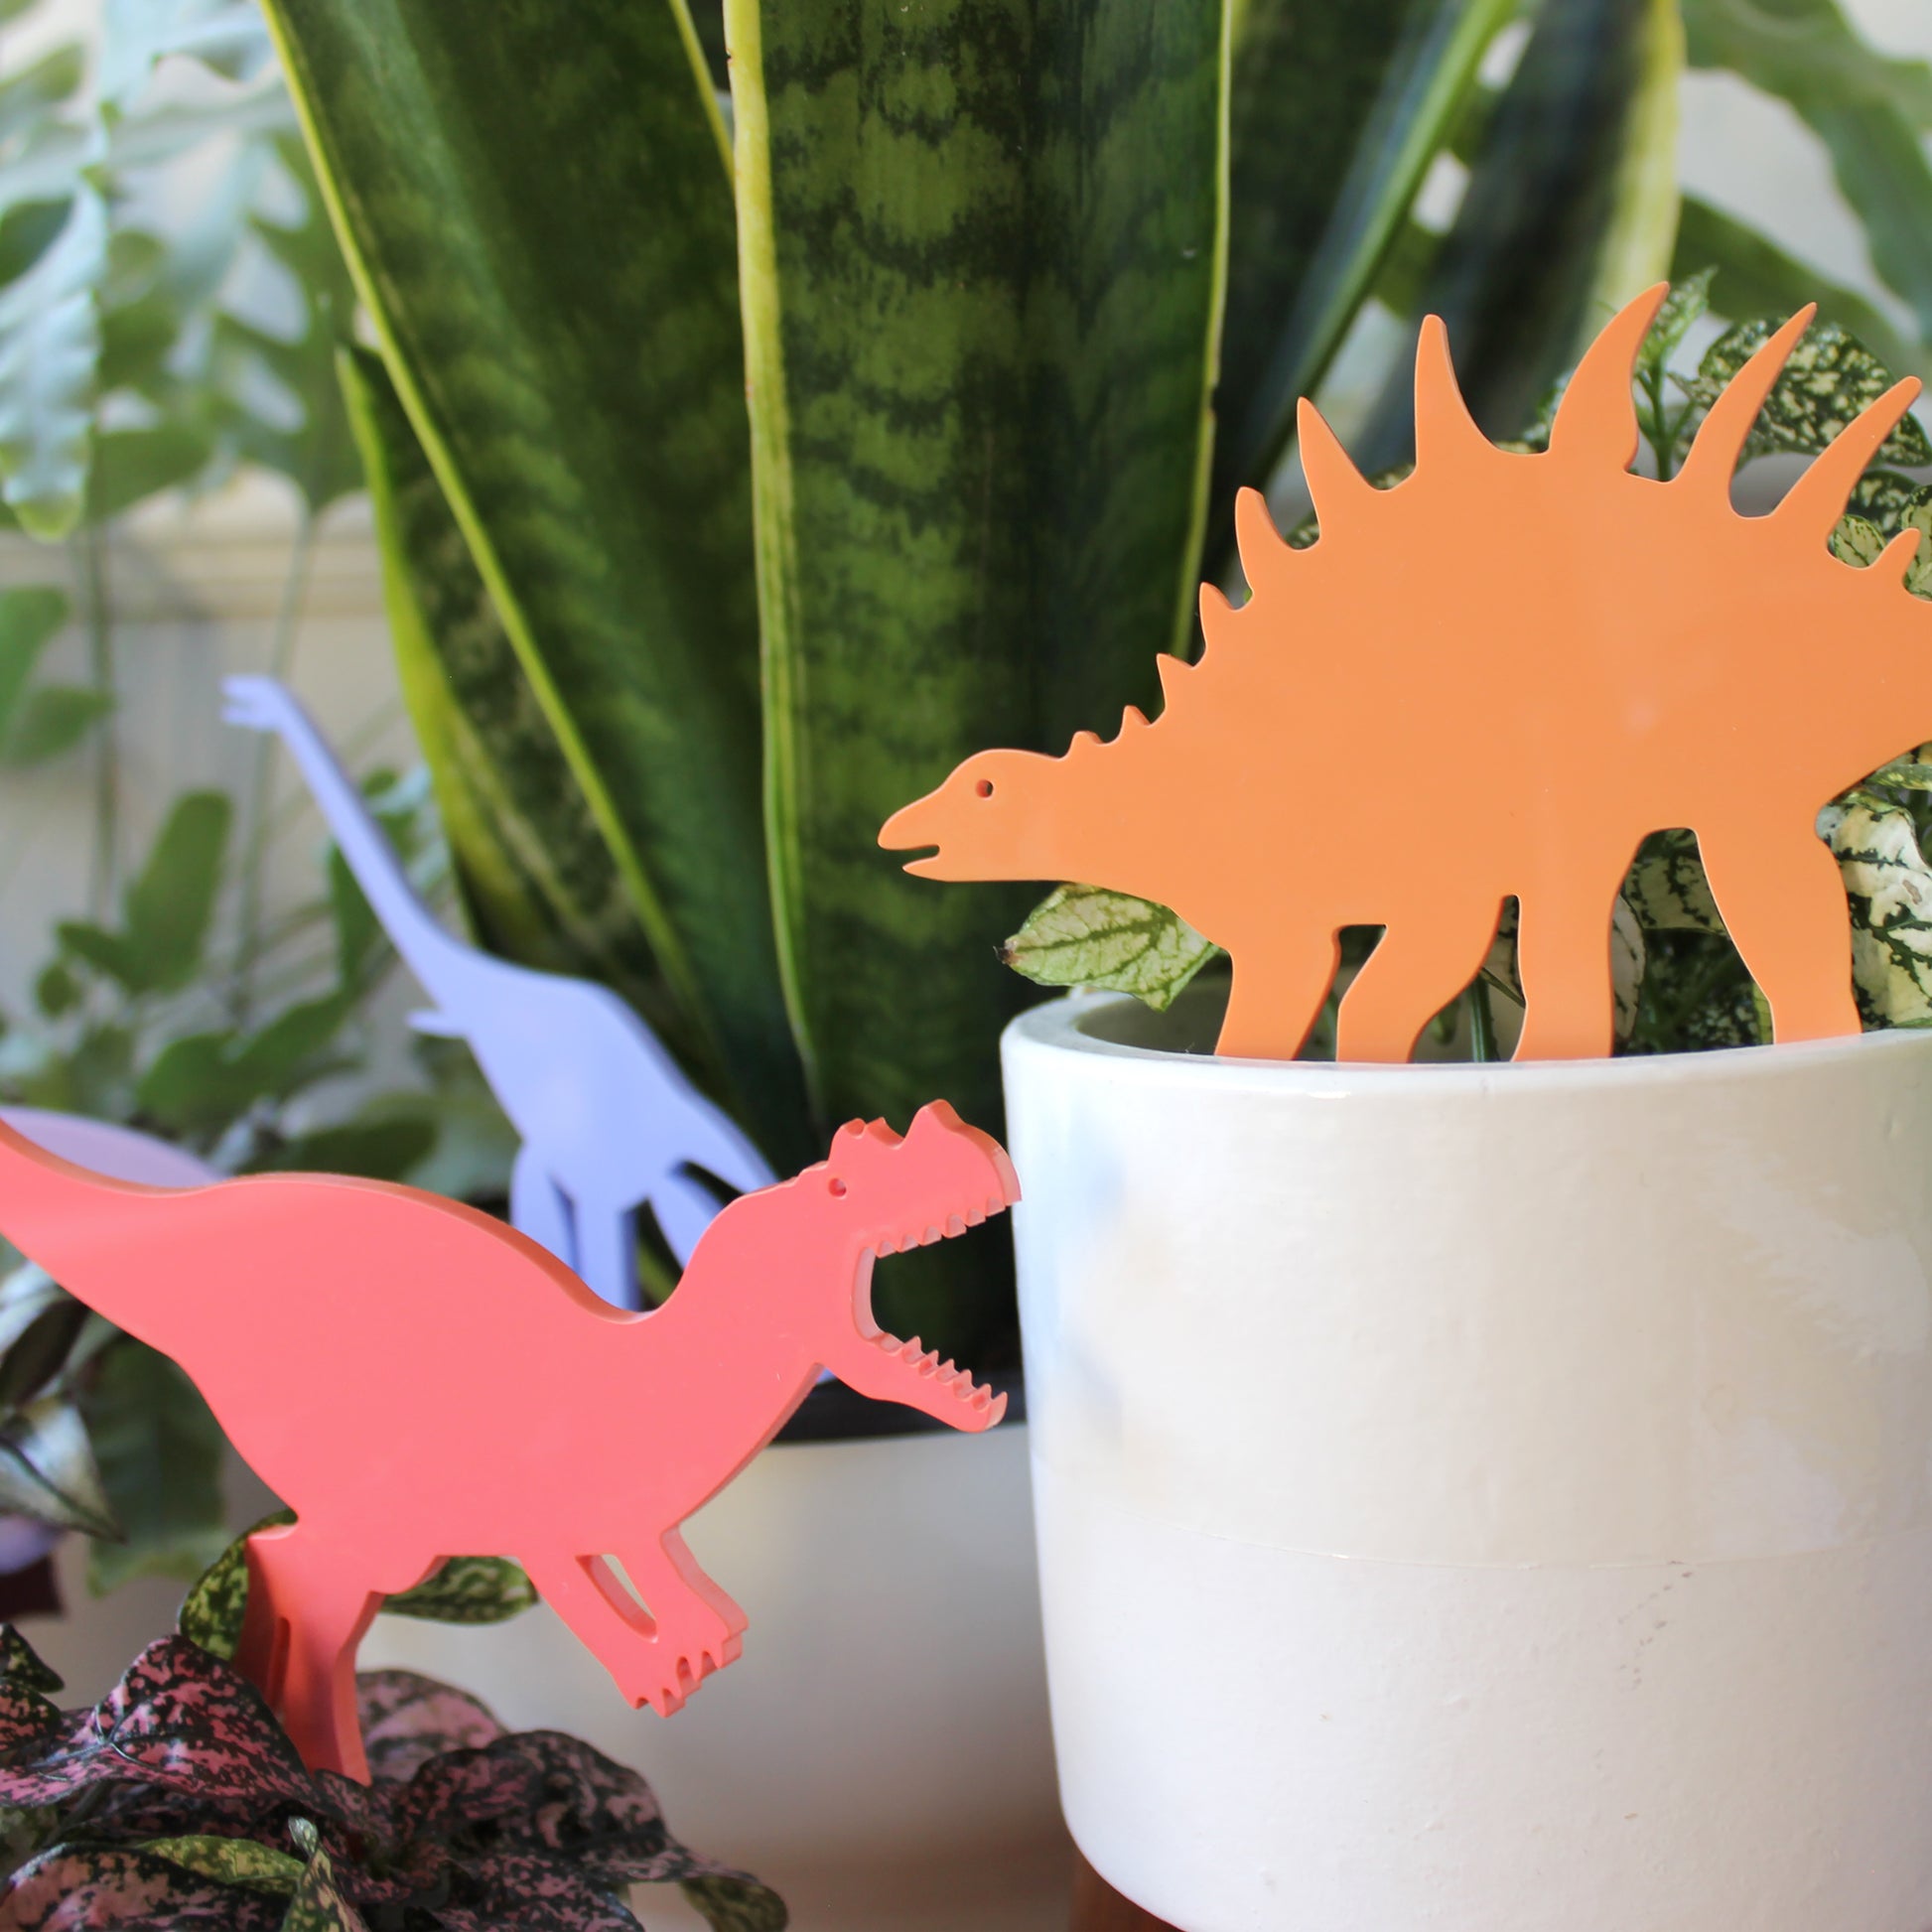 dinosaur plant decoration in plant pot